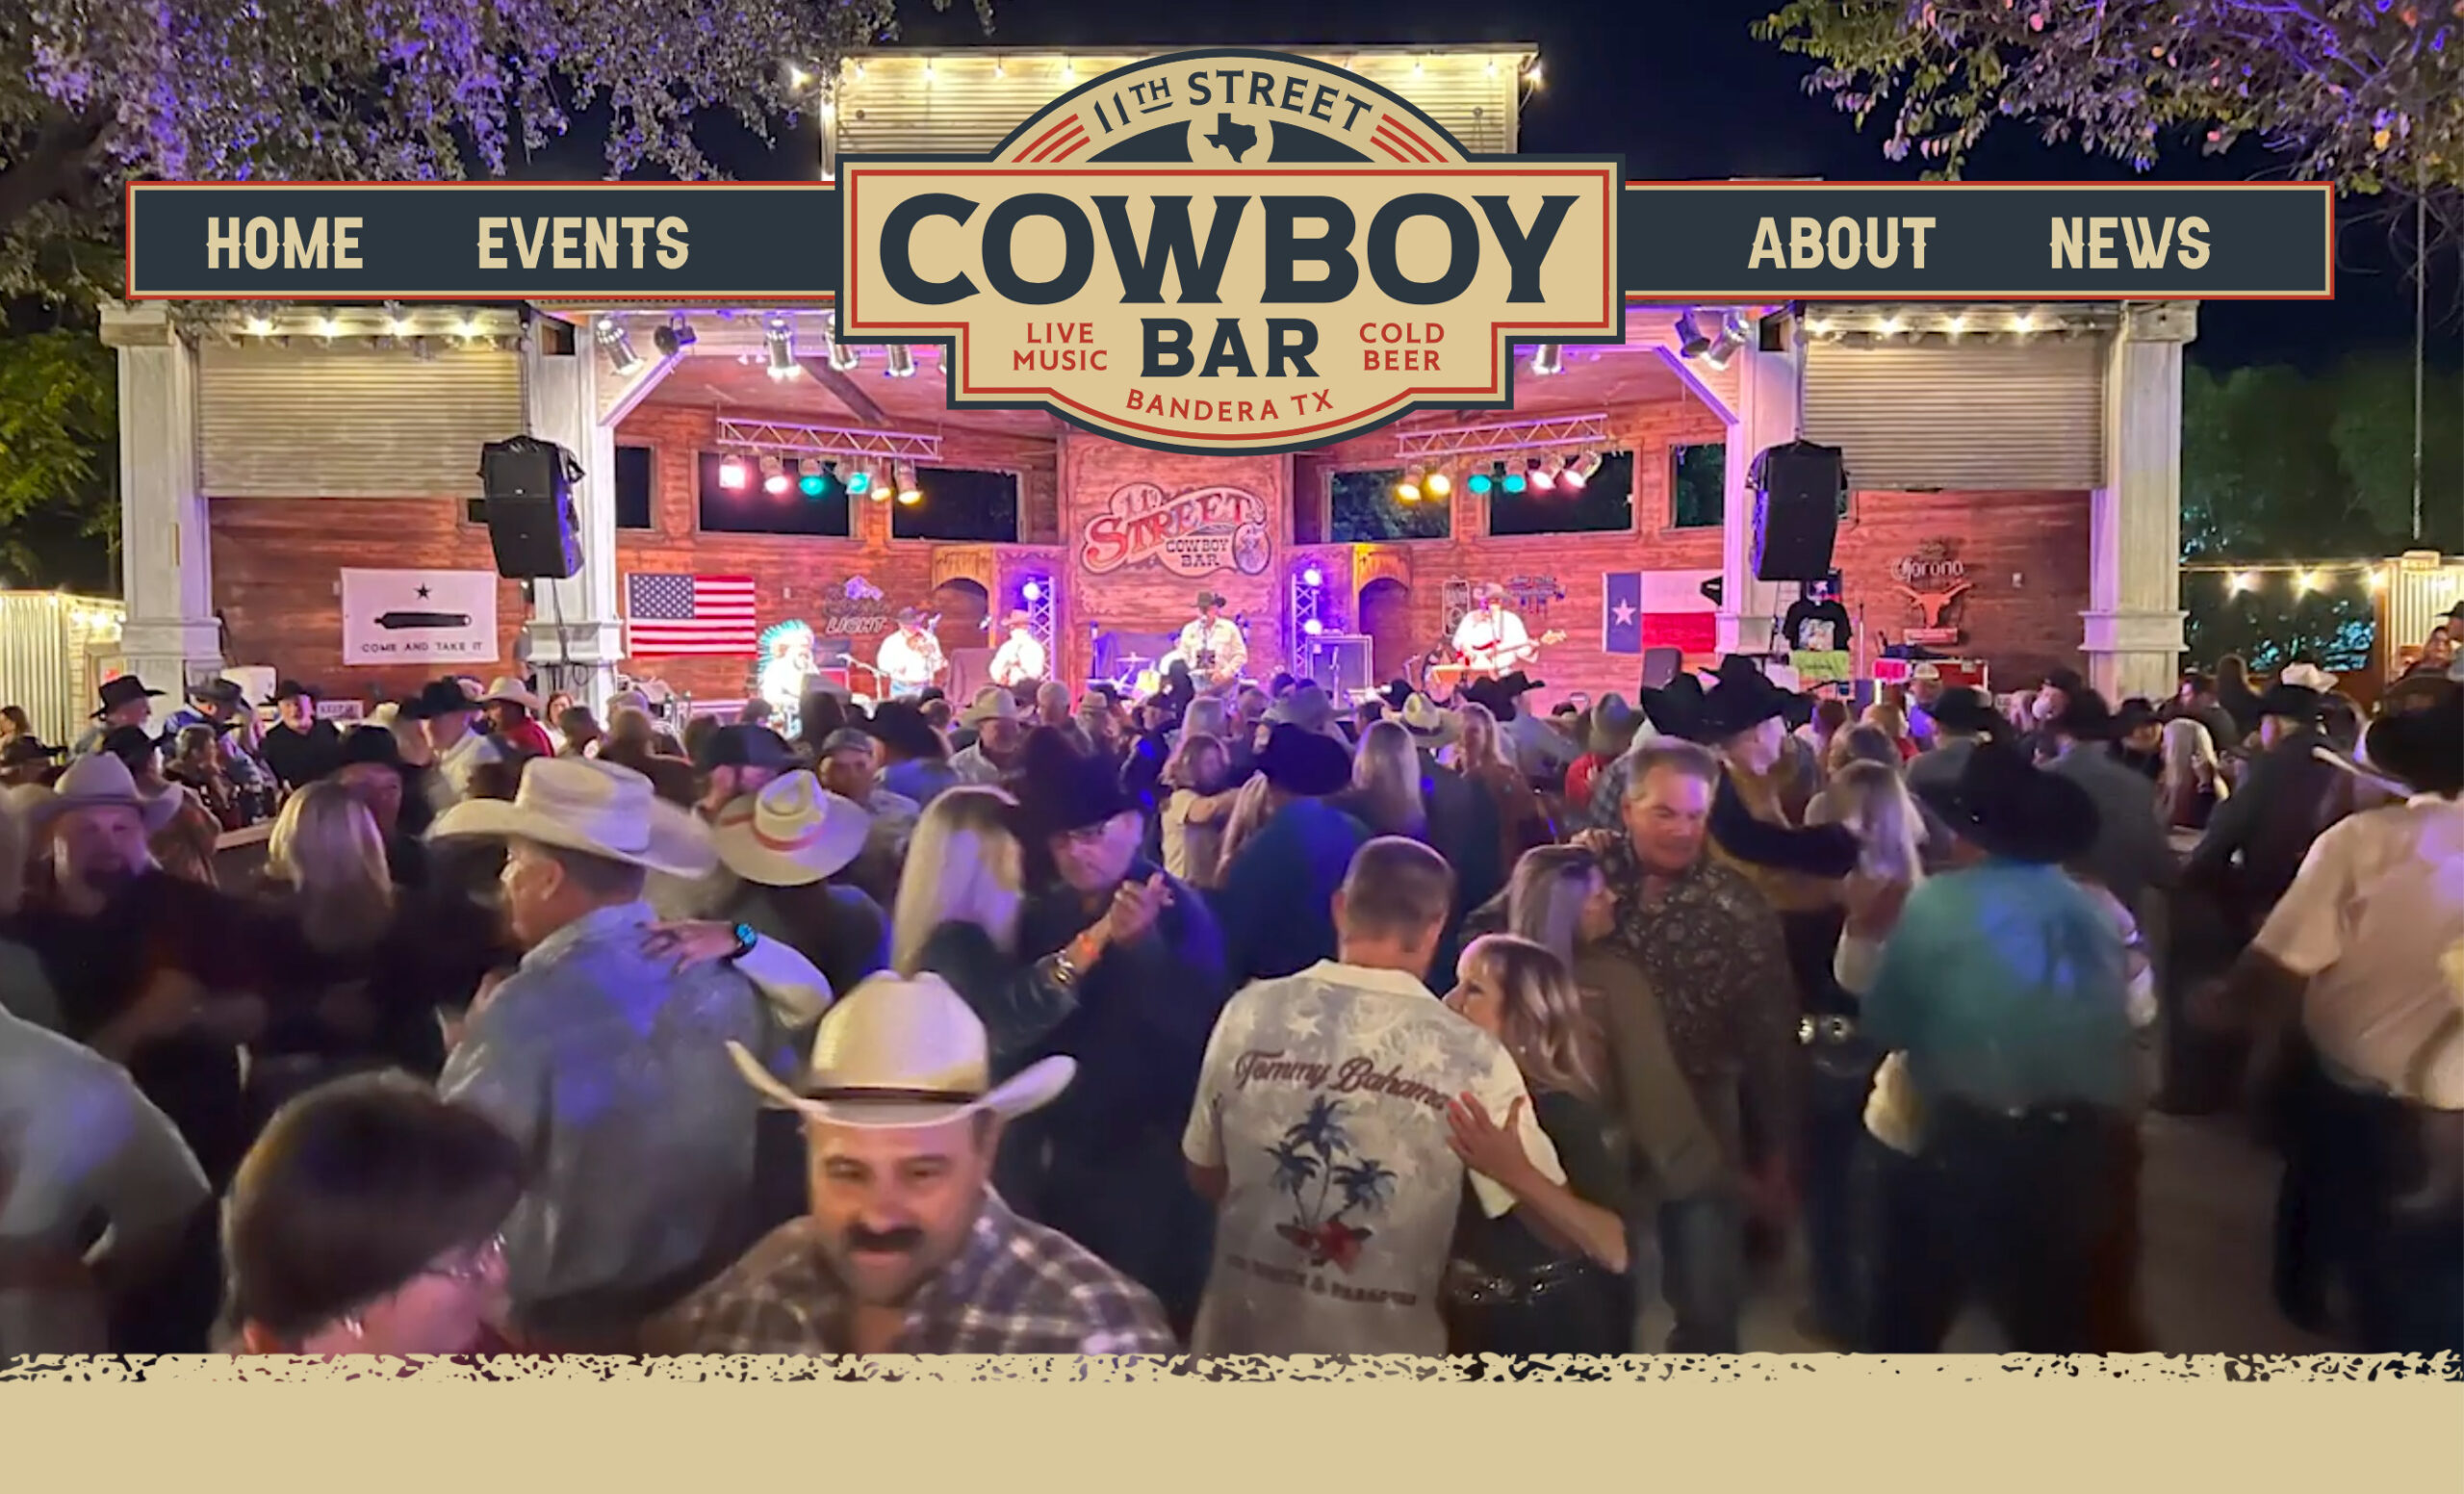 11th Street Cowboy Bar Image